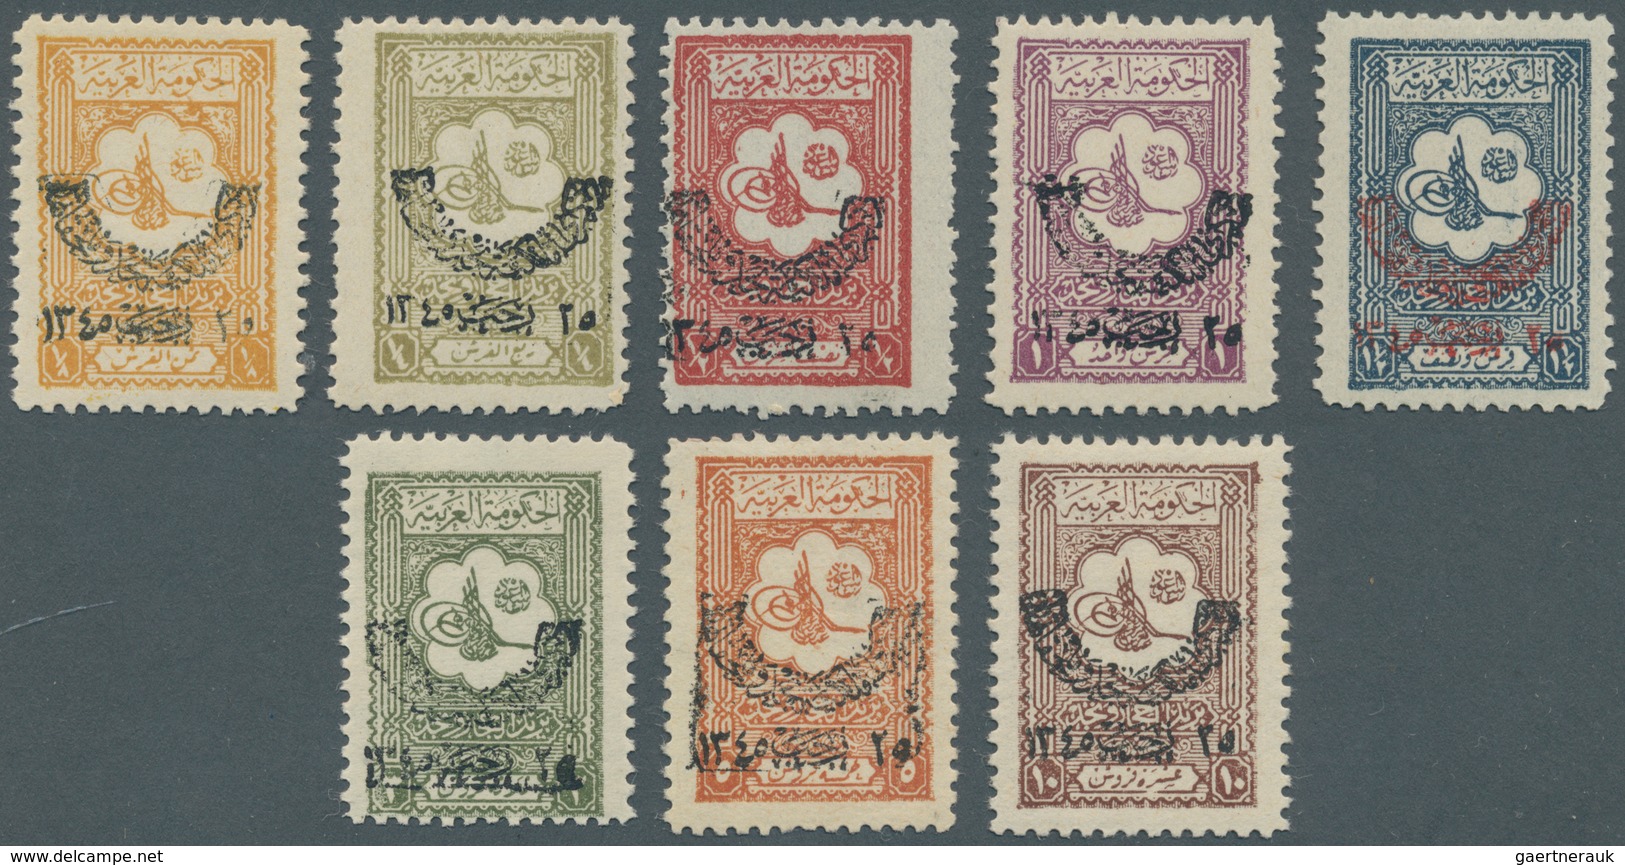 Saudi-Arabien - Nedschd: 1926/27, Definitives Set 1/2 Pia-10 Pia, Mint Never Hinged MNH. Establishme - Saudi-Arabien